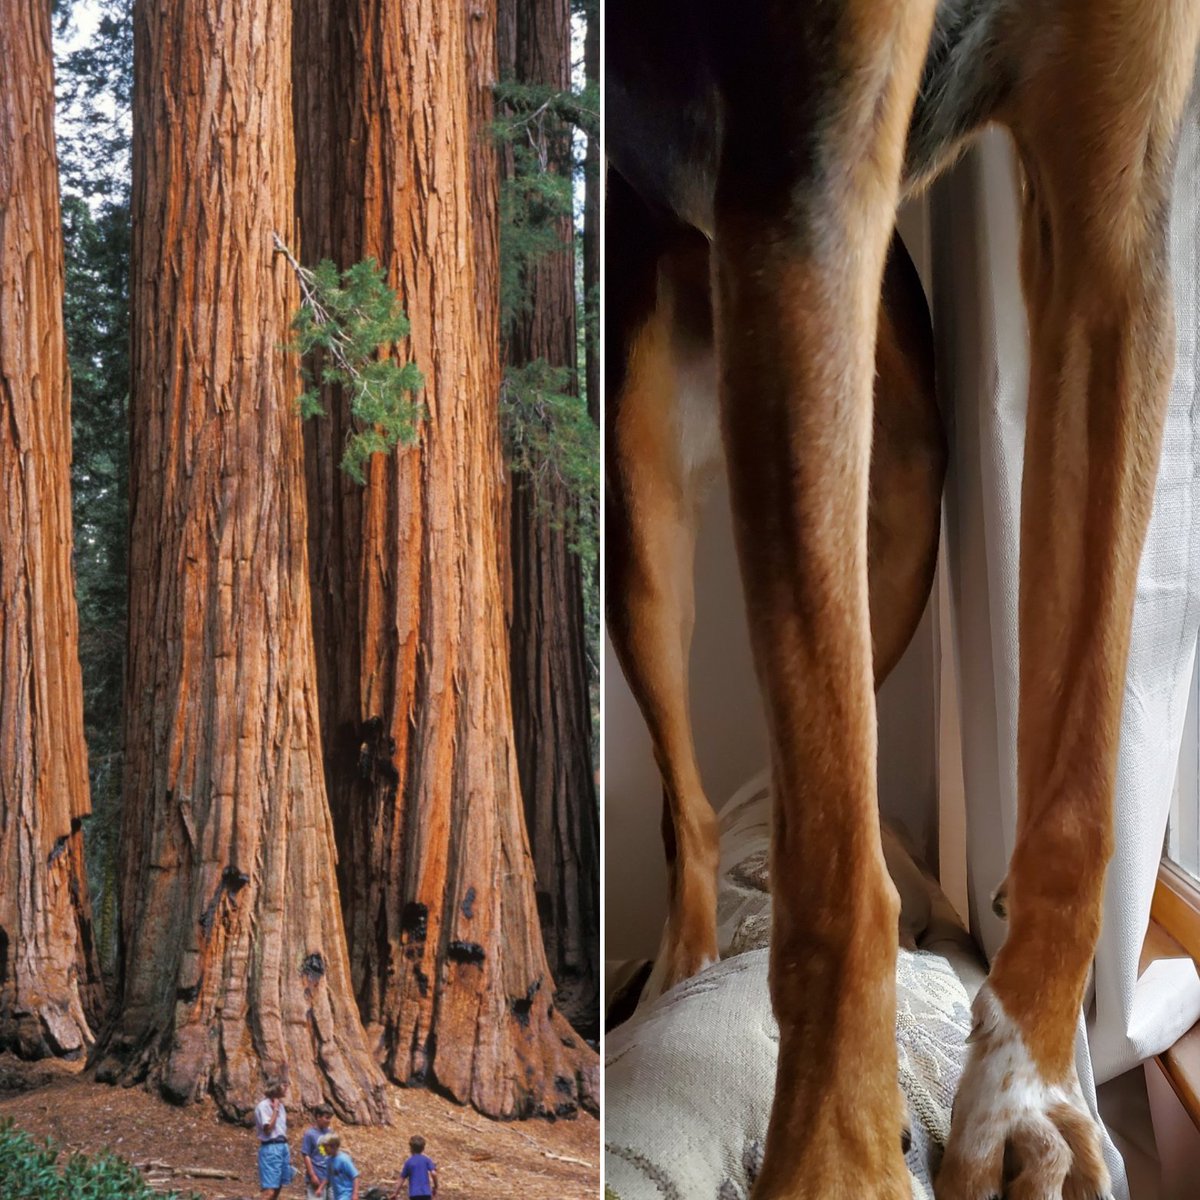 Tegan G. on X: Larry's got legs like tree trunks. Sequoia tree